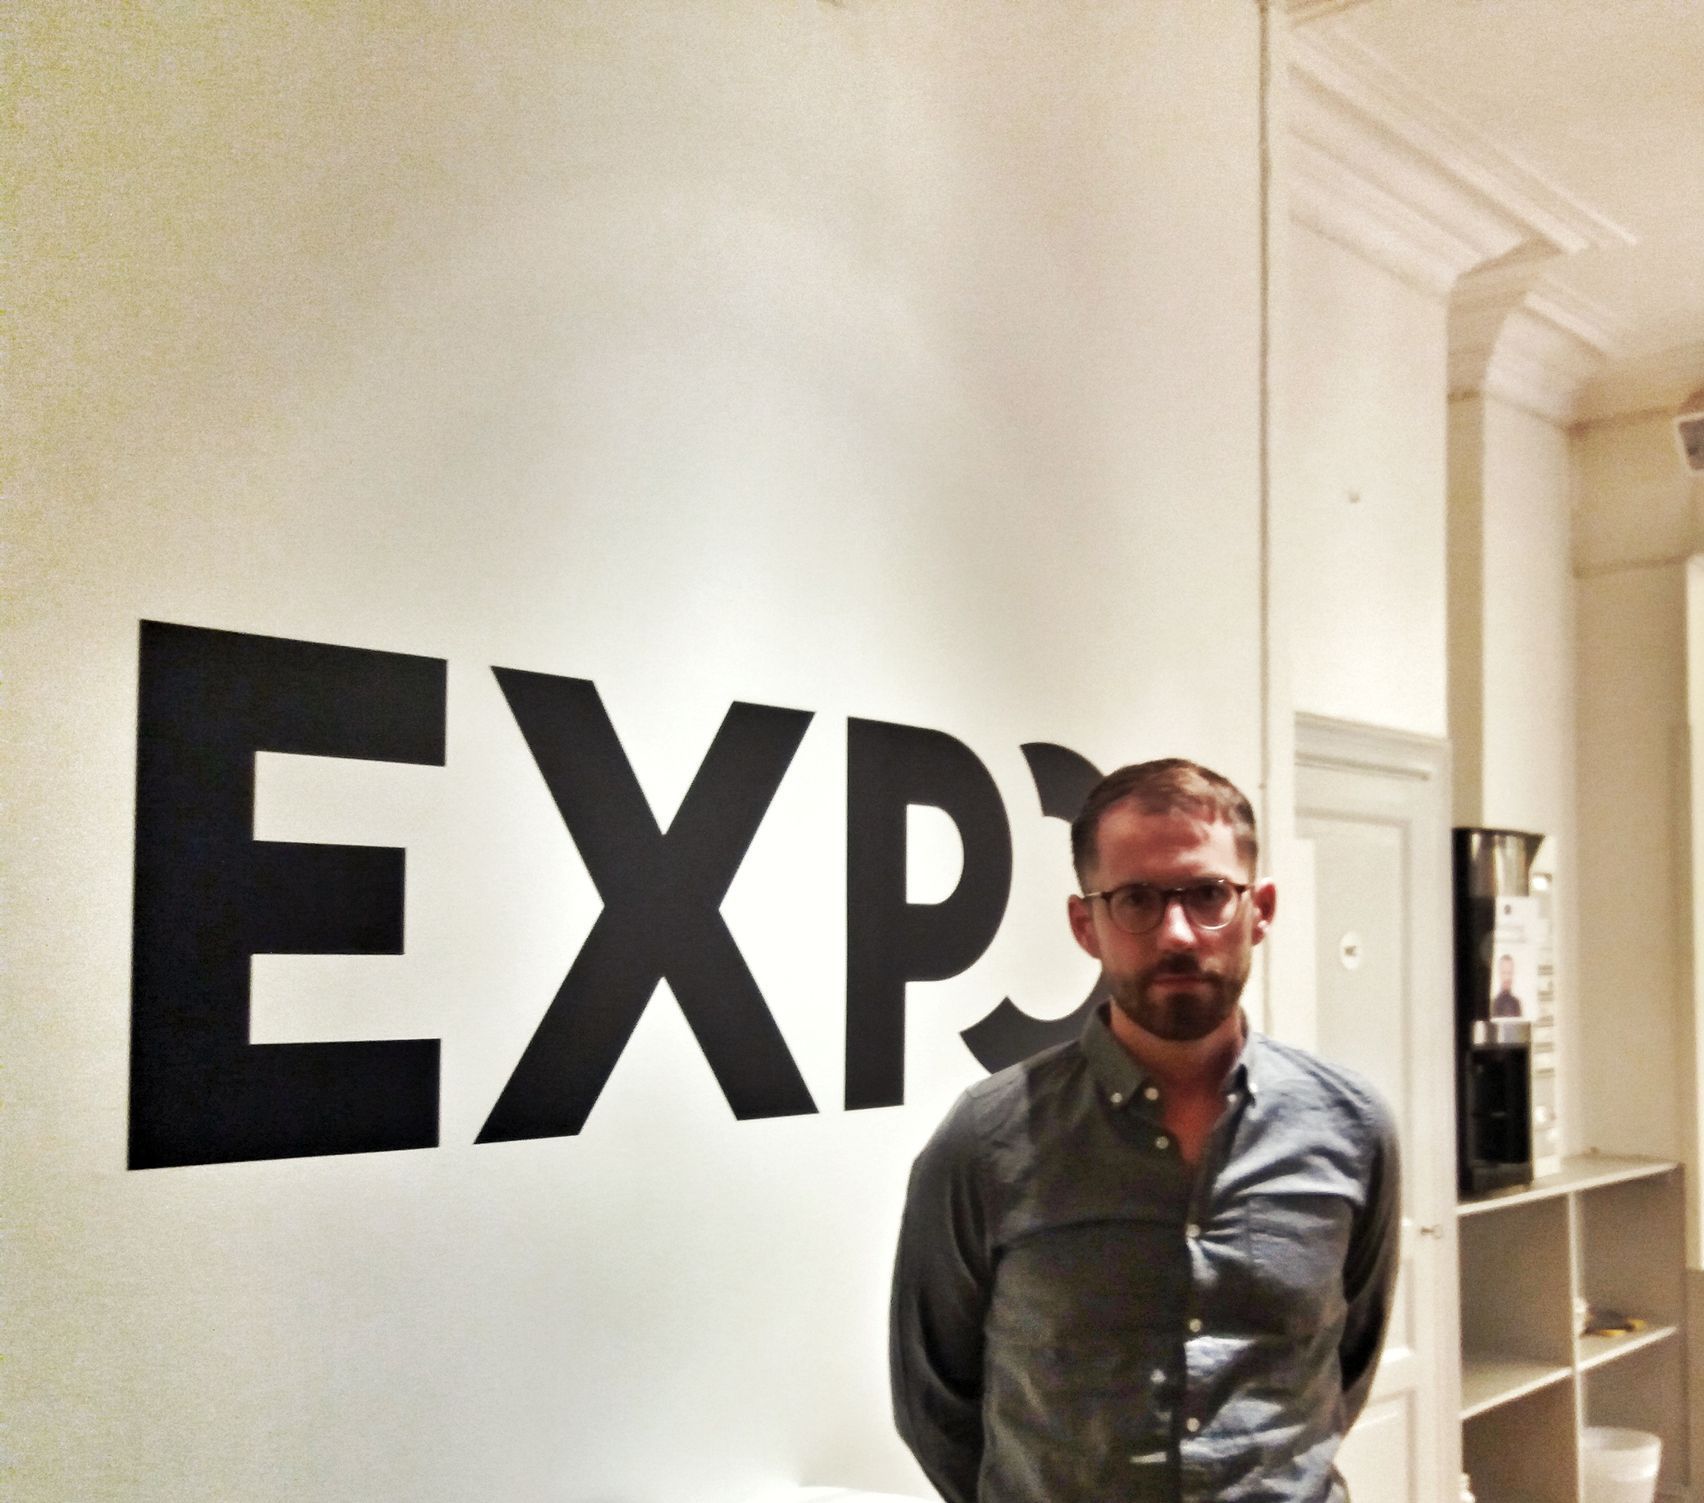 Šéfredaktor časopisu Expo Daniel Poohl.